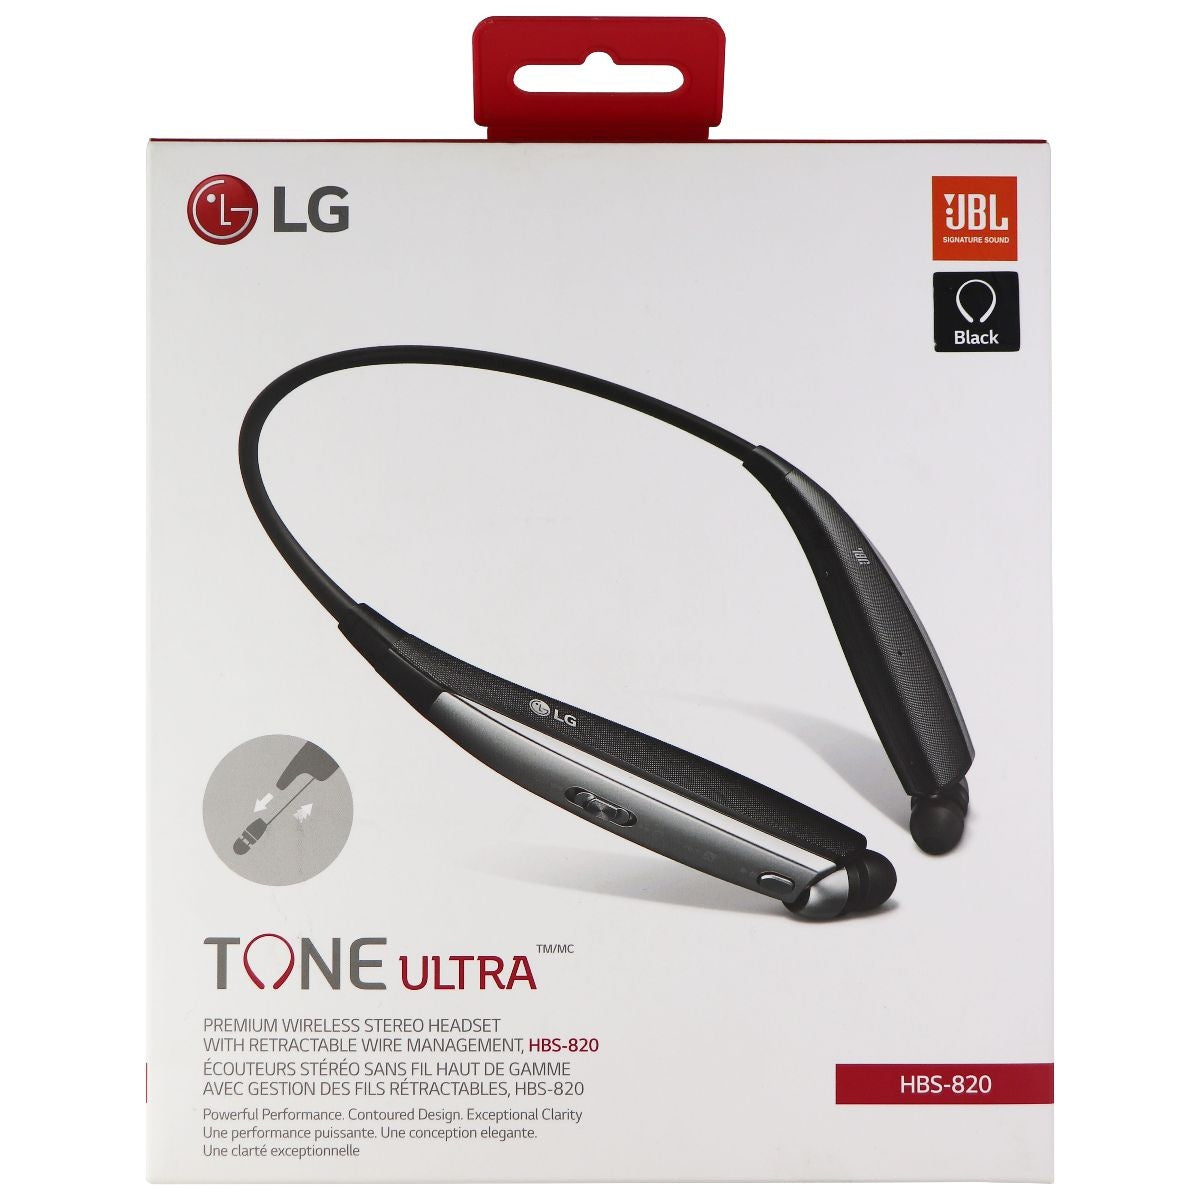 LG Tone Ultra Premium Wireless Stereo Bluetooth Headset - Black (HBS-820) Portable Audio - Headphones LG    - Simple Cell Bulk Wholesale Pricing - USA Seller